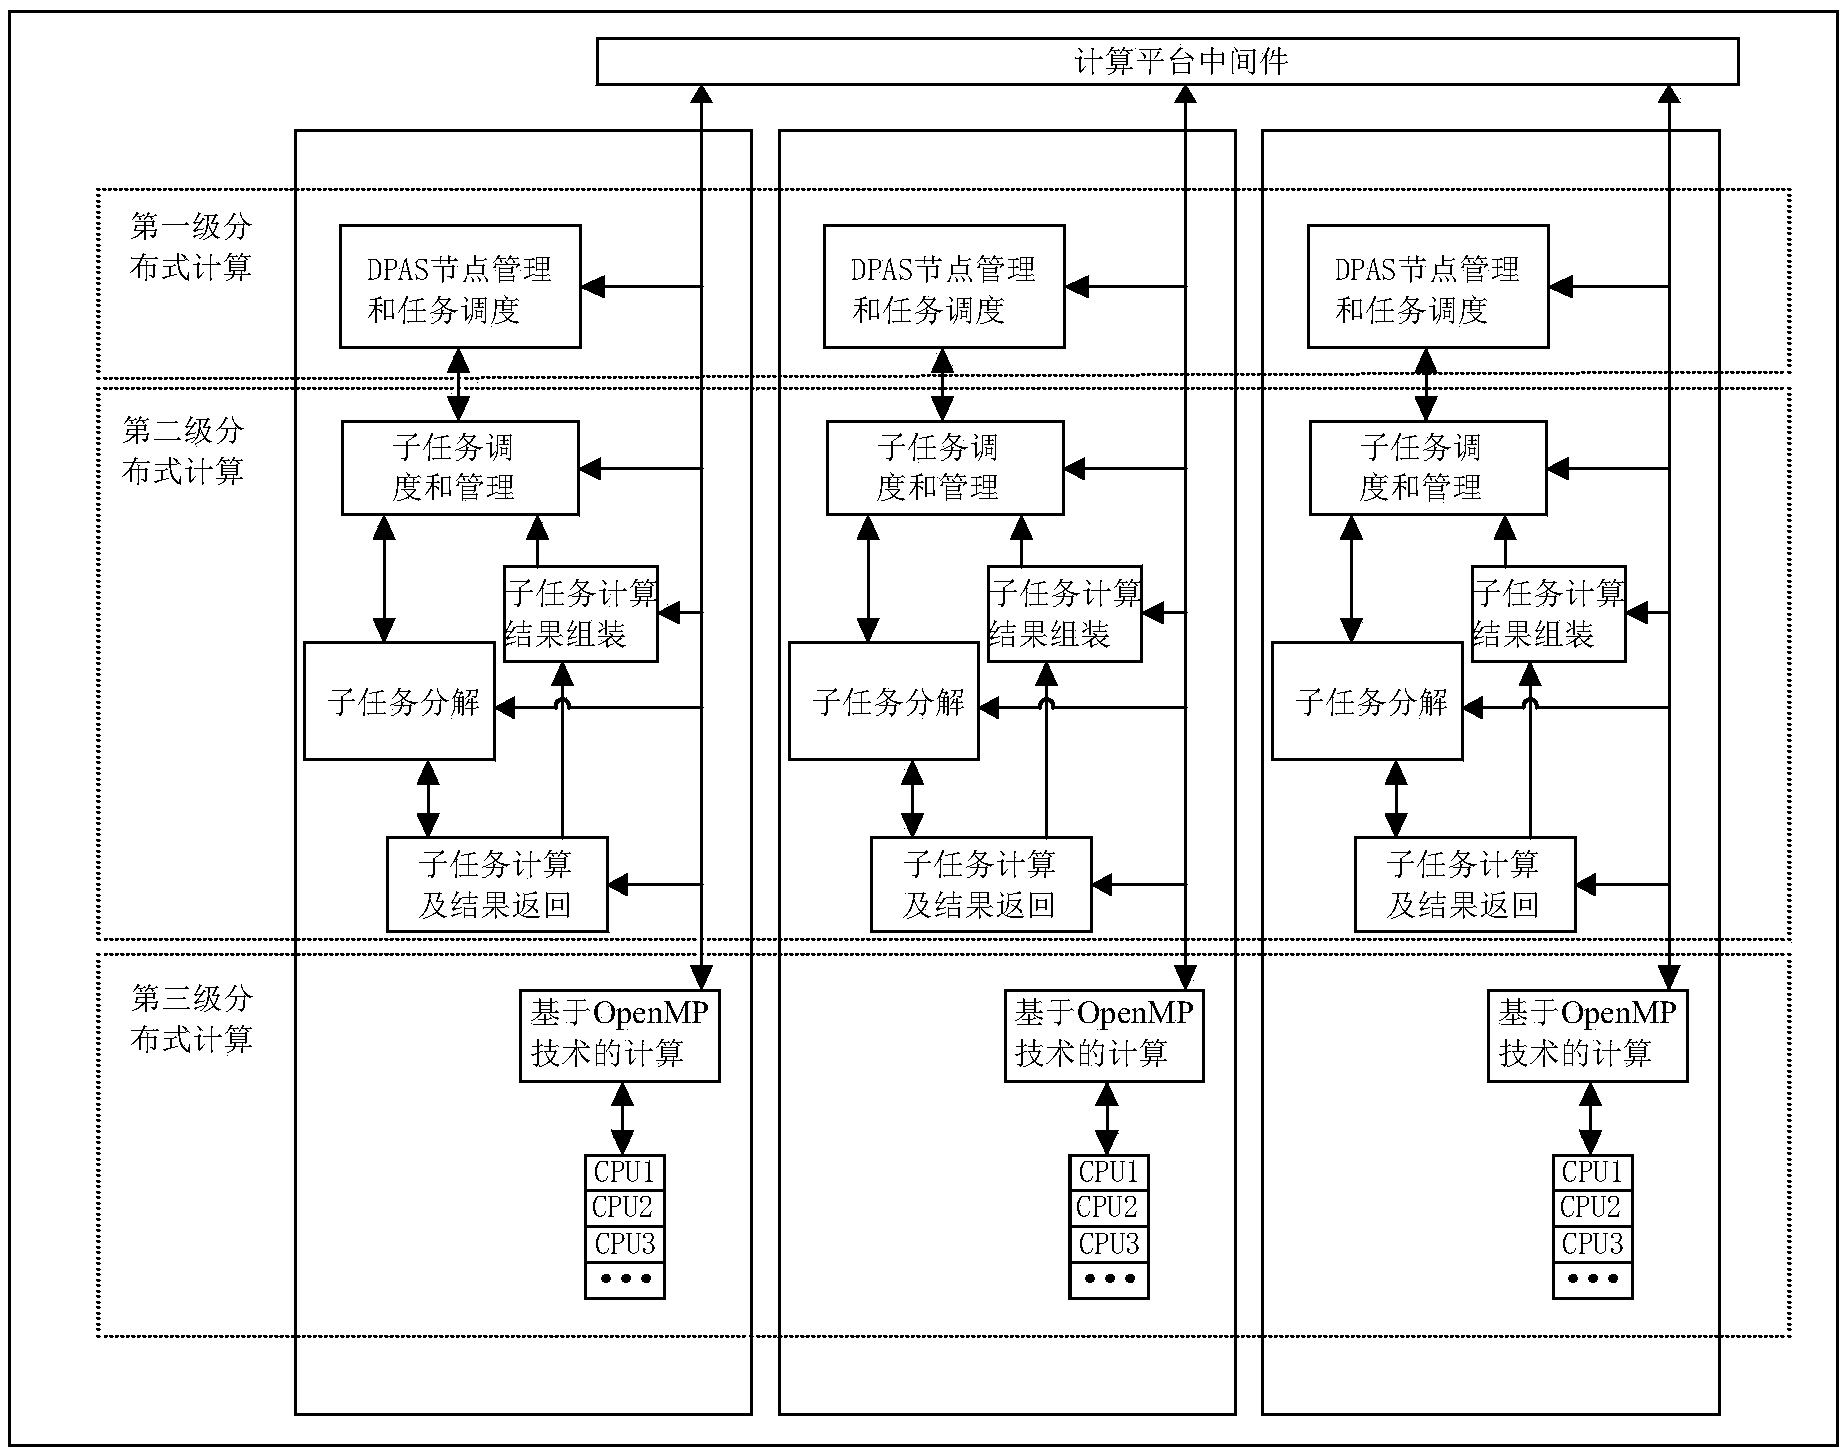 Multilevel distributed task processing system